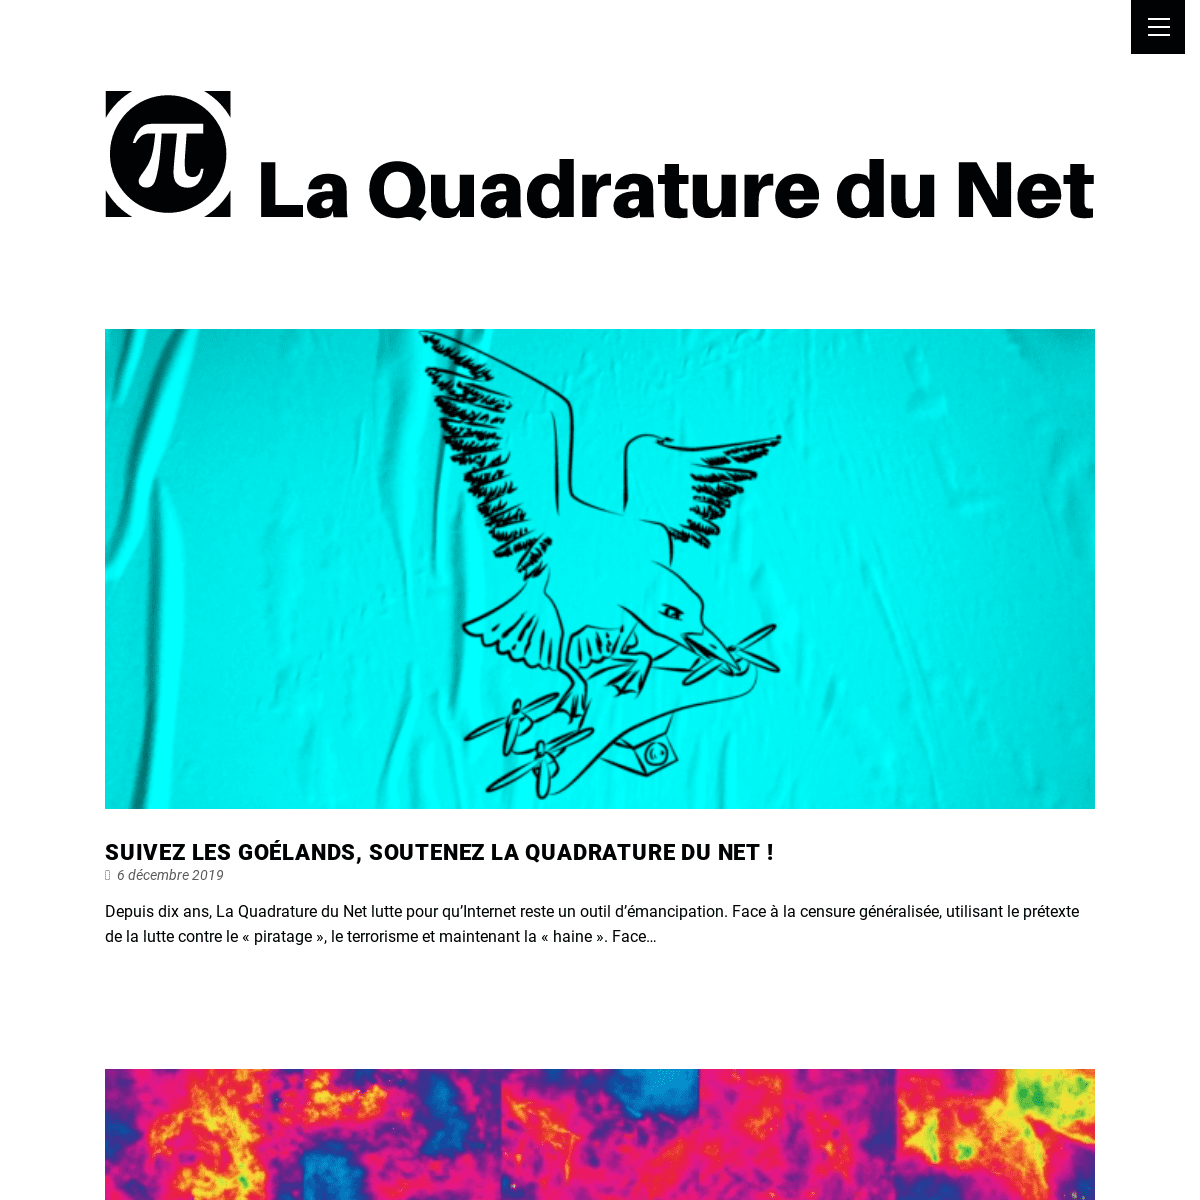 A complete backup of laquadrature.net